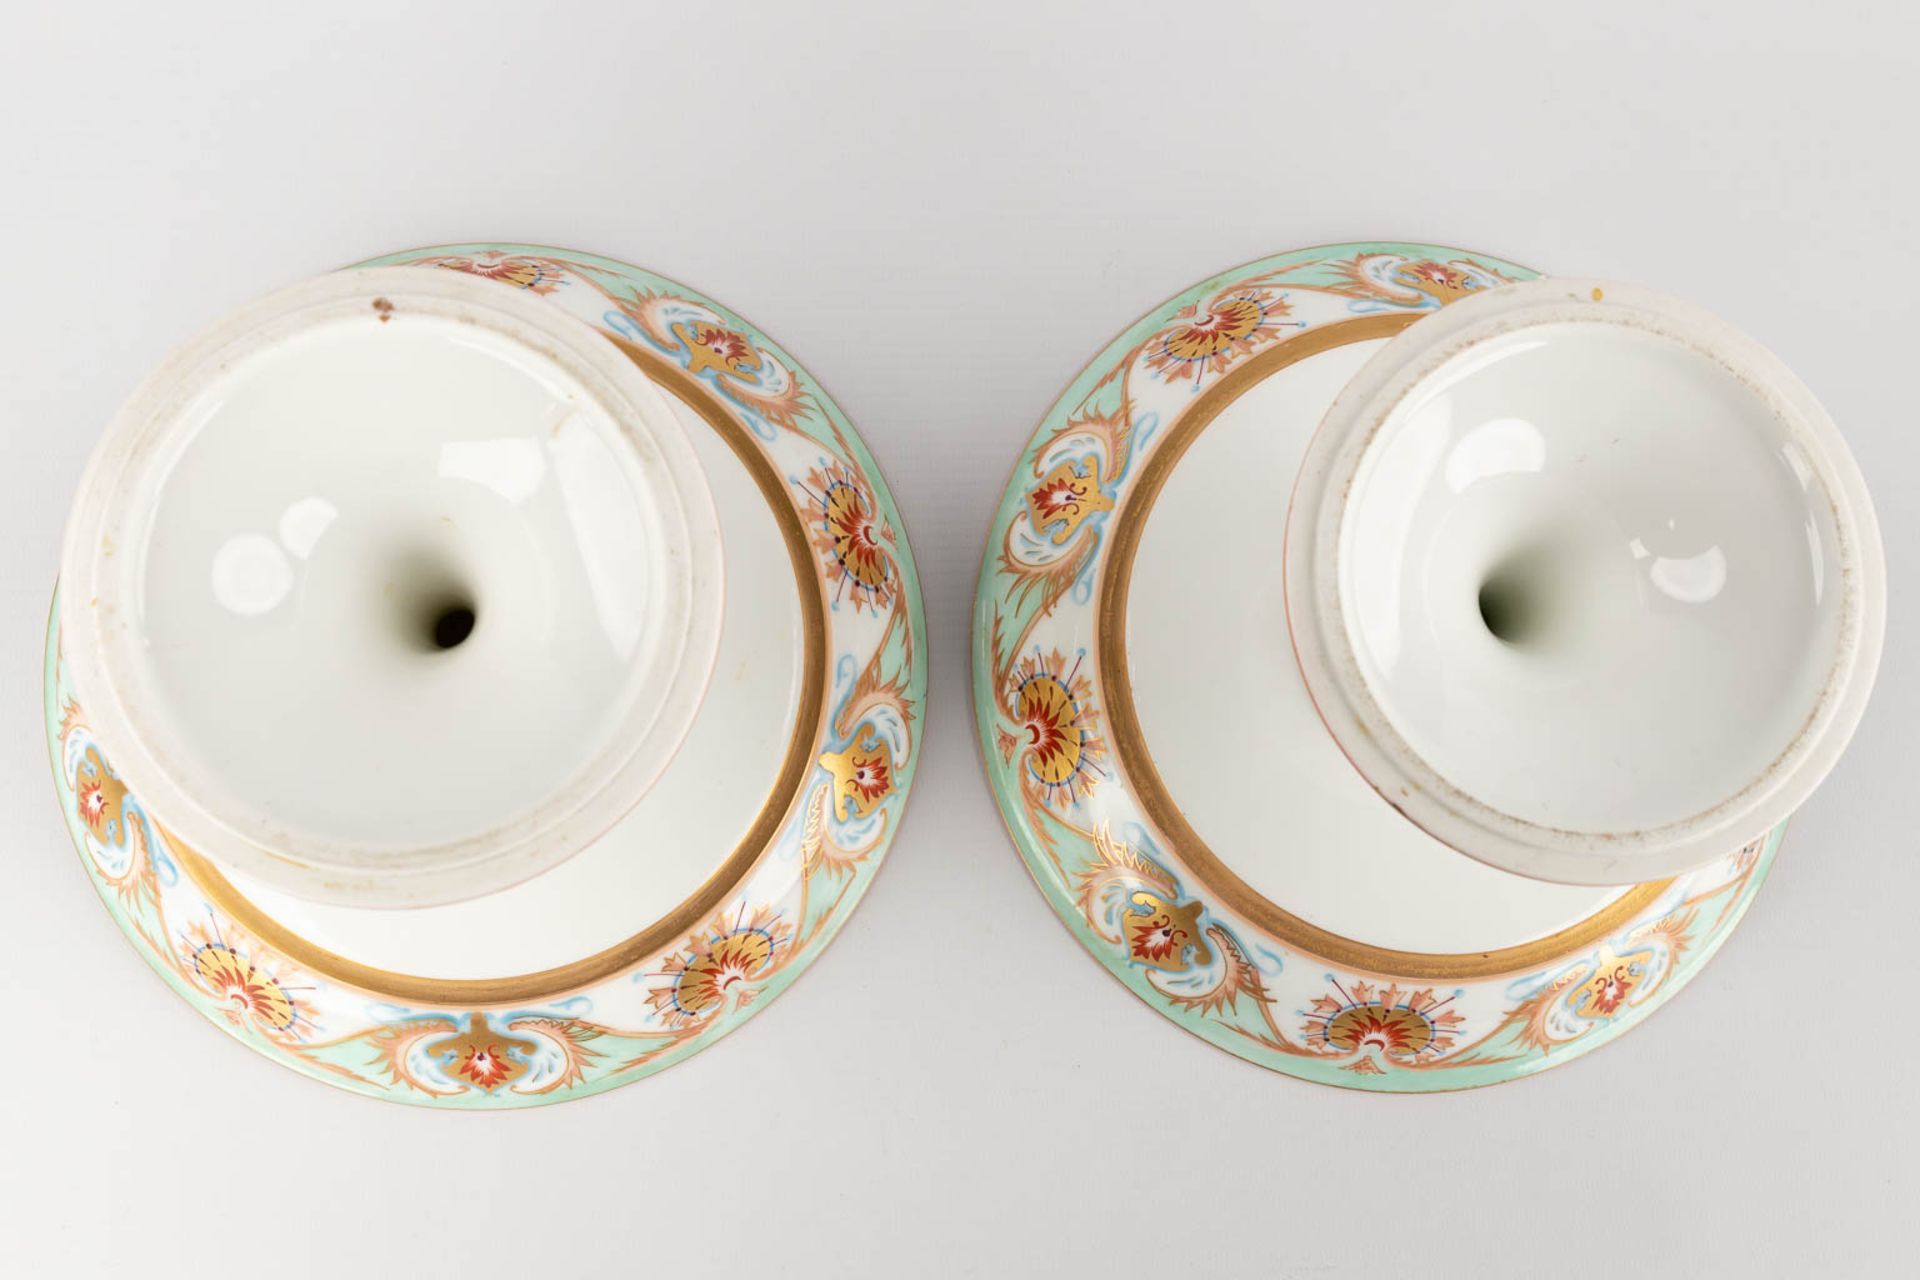 A set of 2 tazza and 6 plates, Count 'De Kerckhove', Brussel. 19th C. (H:13,5 x D:22,5 cm) - Image 9 of 15